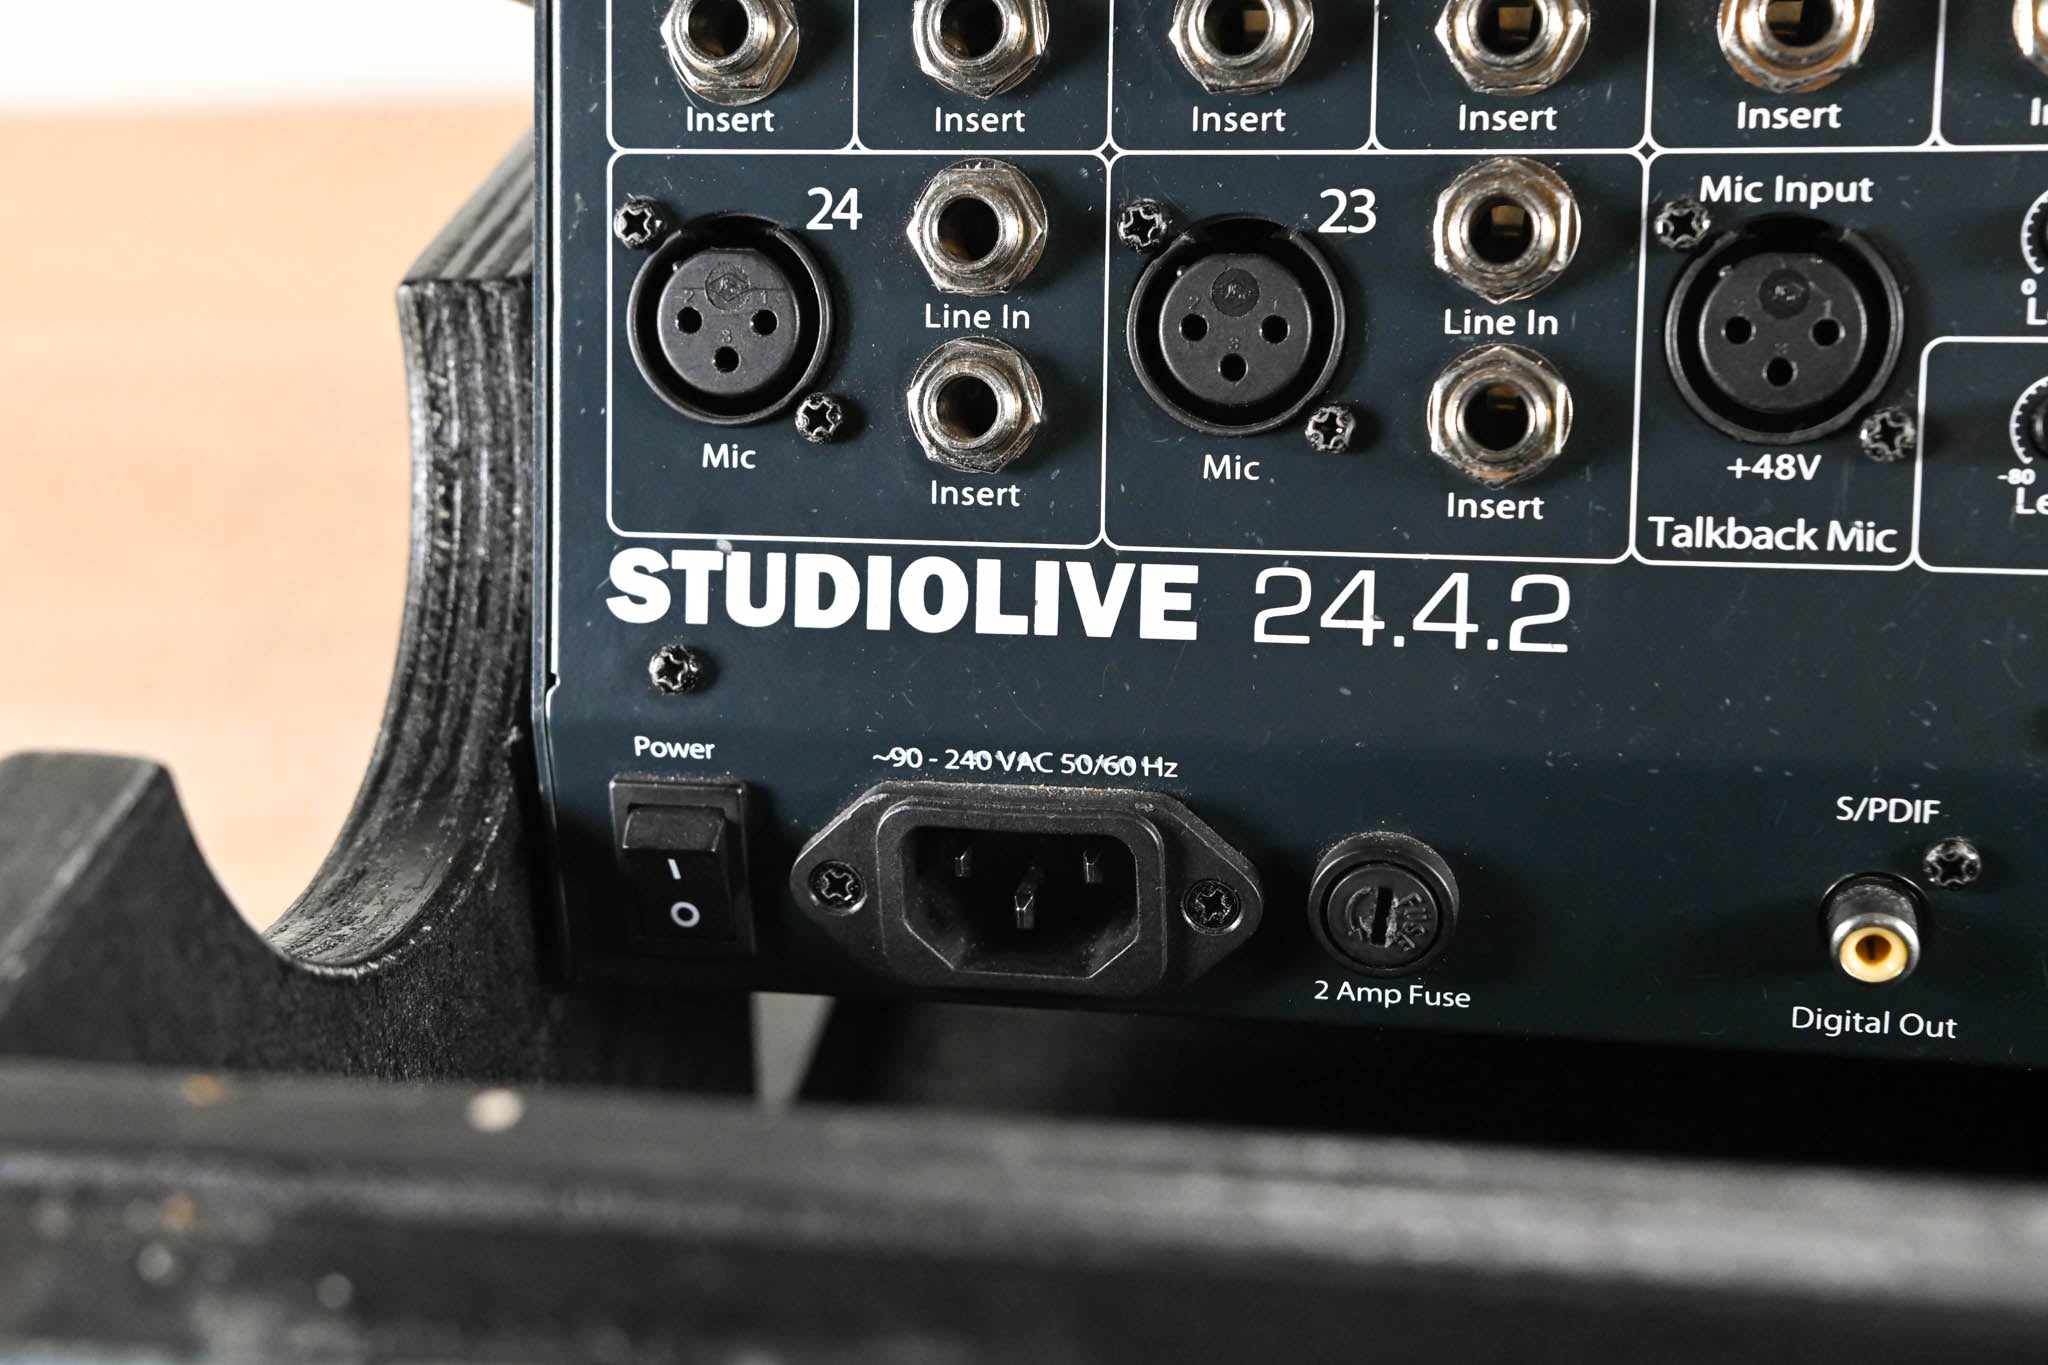 PreSonus StudioLive 24.4.2 24-Channel Digital Audio Mixer with Road Case